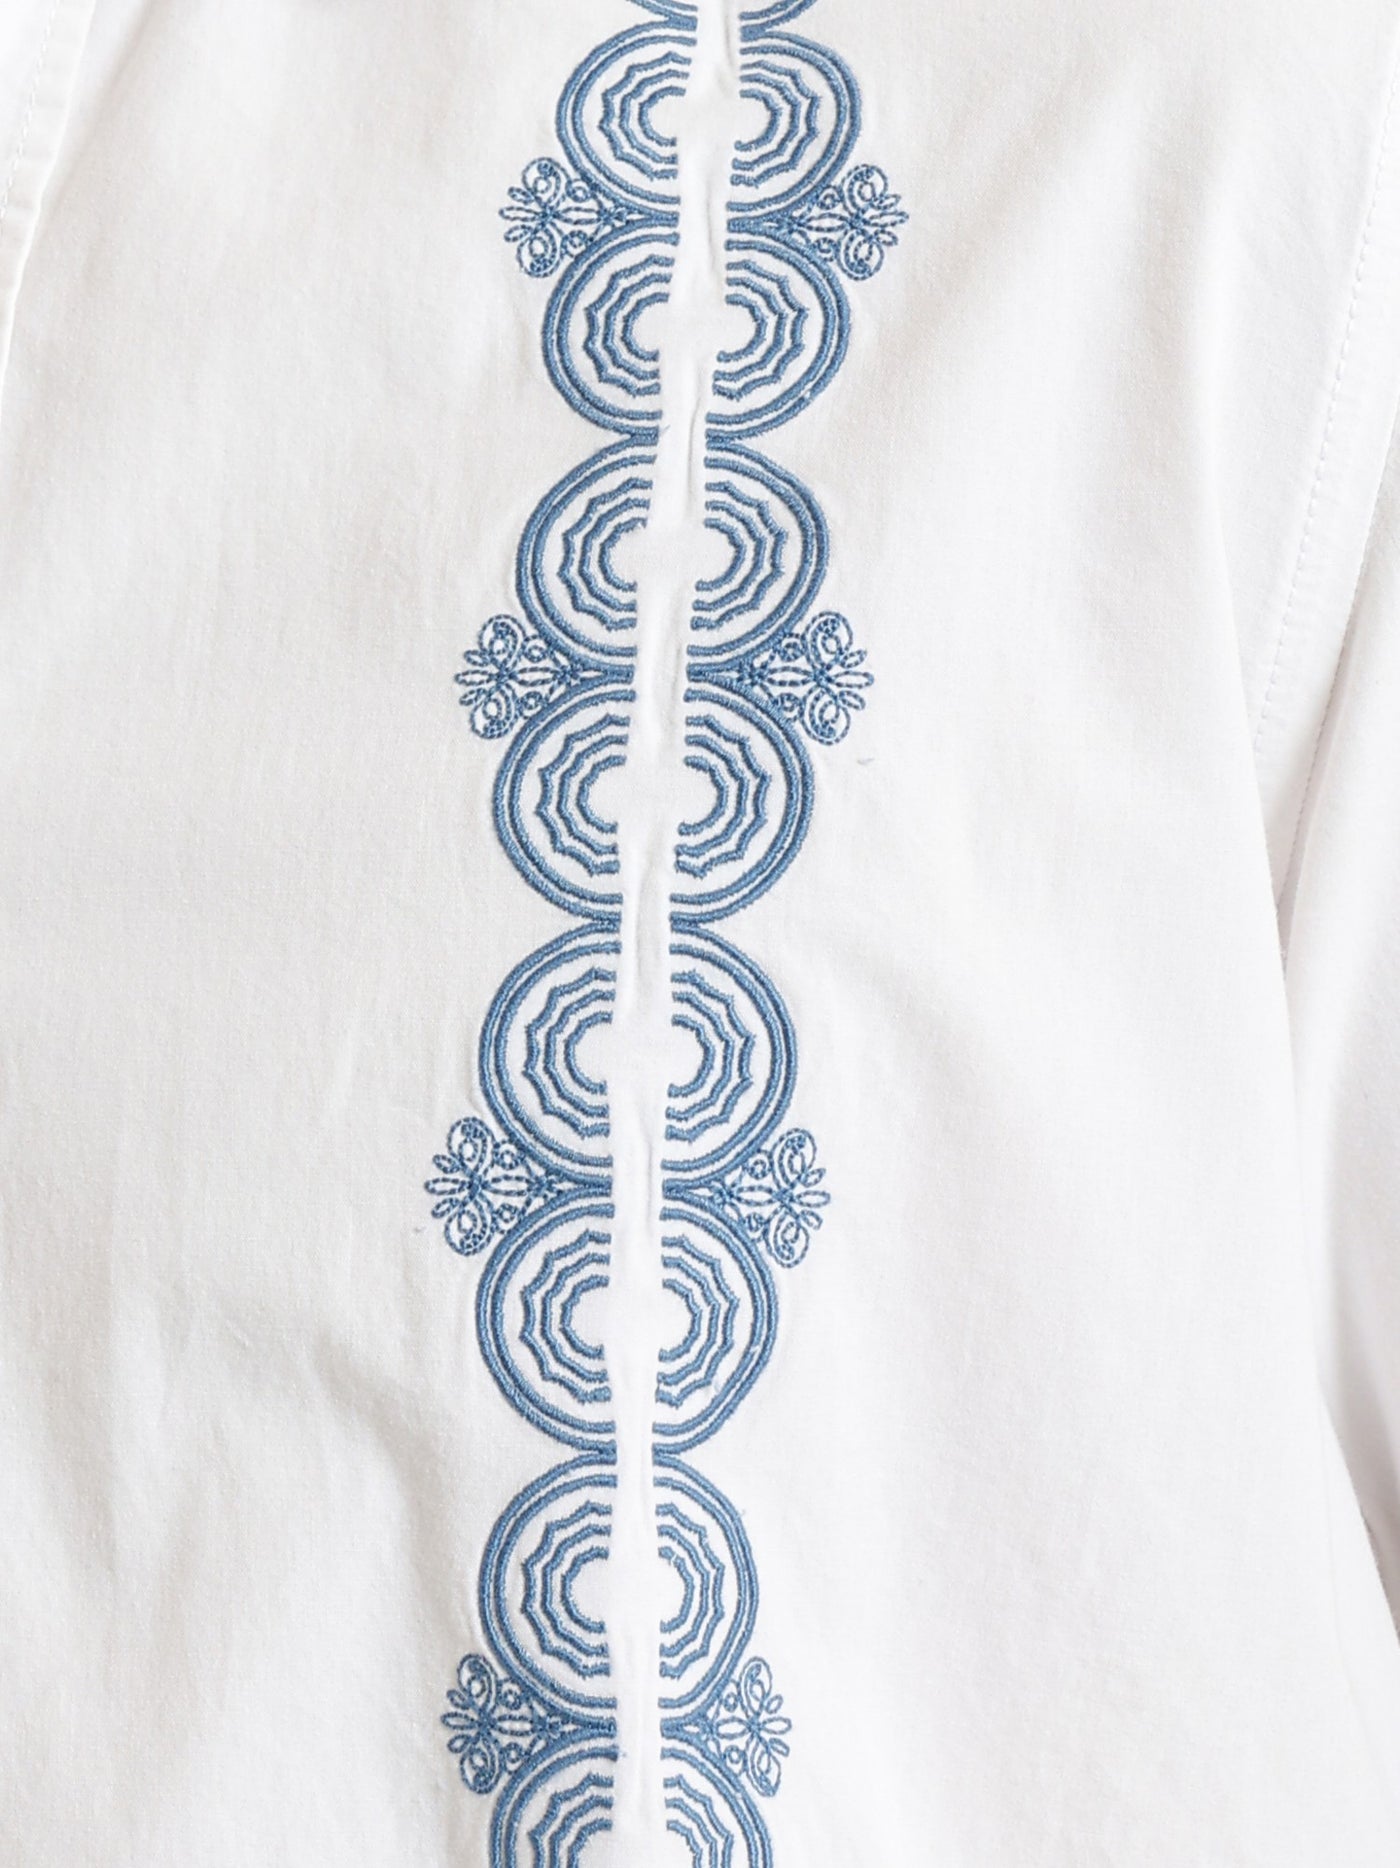 Shirt - Embroidered - Fashionable